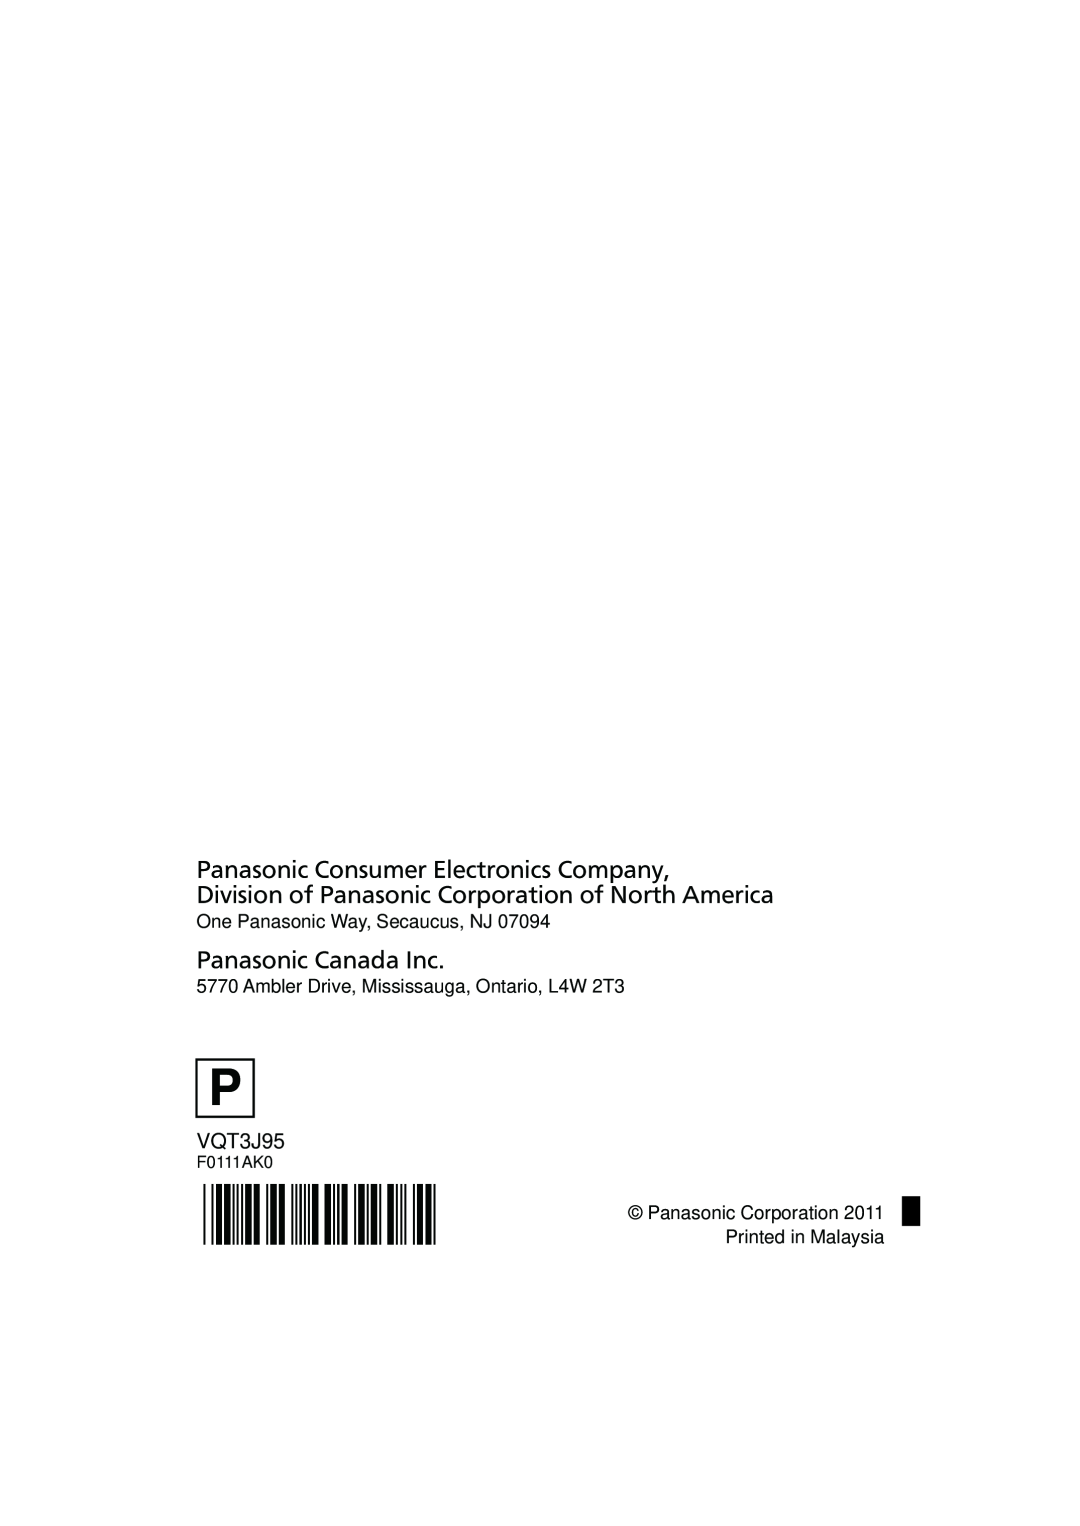 Panasonic HDC-SD40P/PC Panasonic Consumer Electronics Company, Division of Panasonic Corporation of North America, VQT3J95 